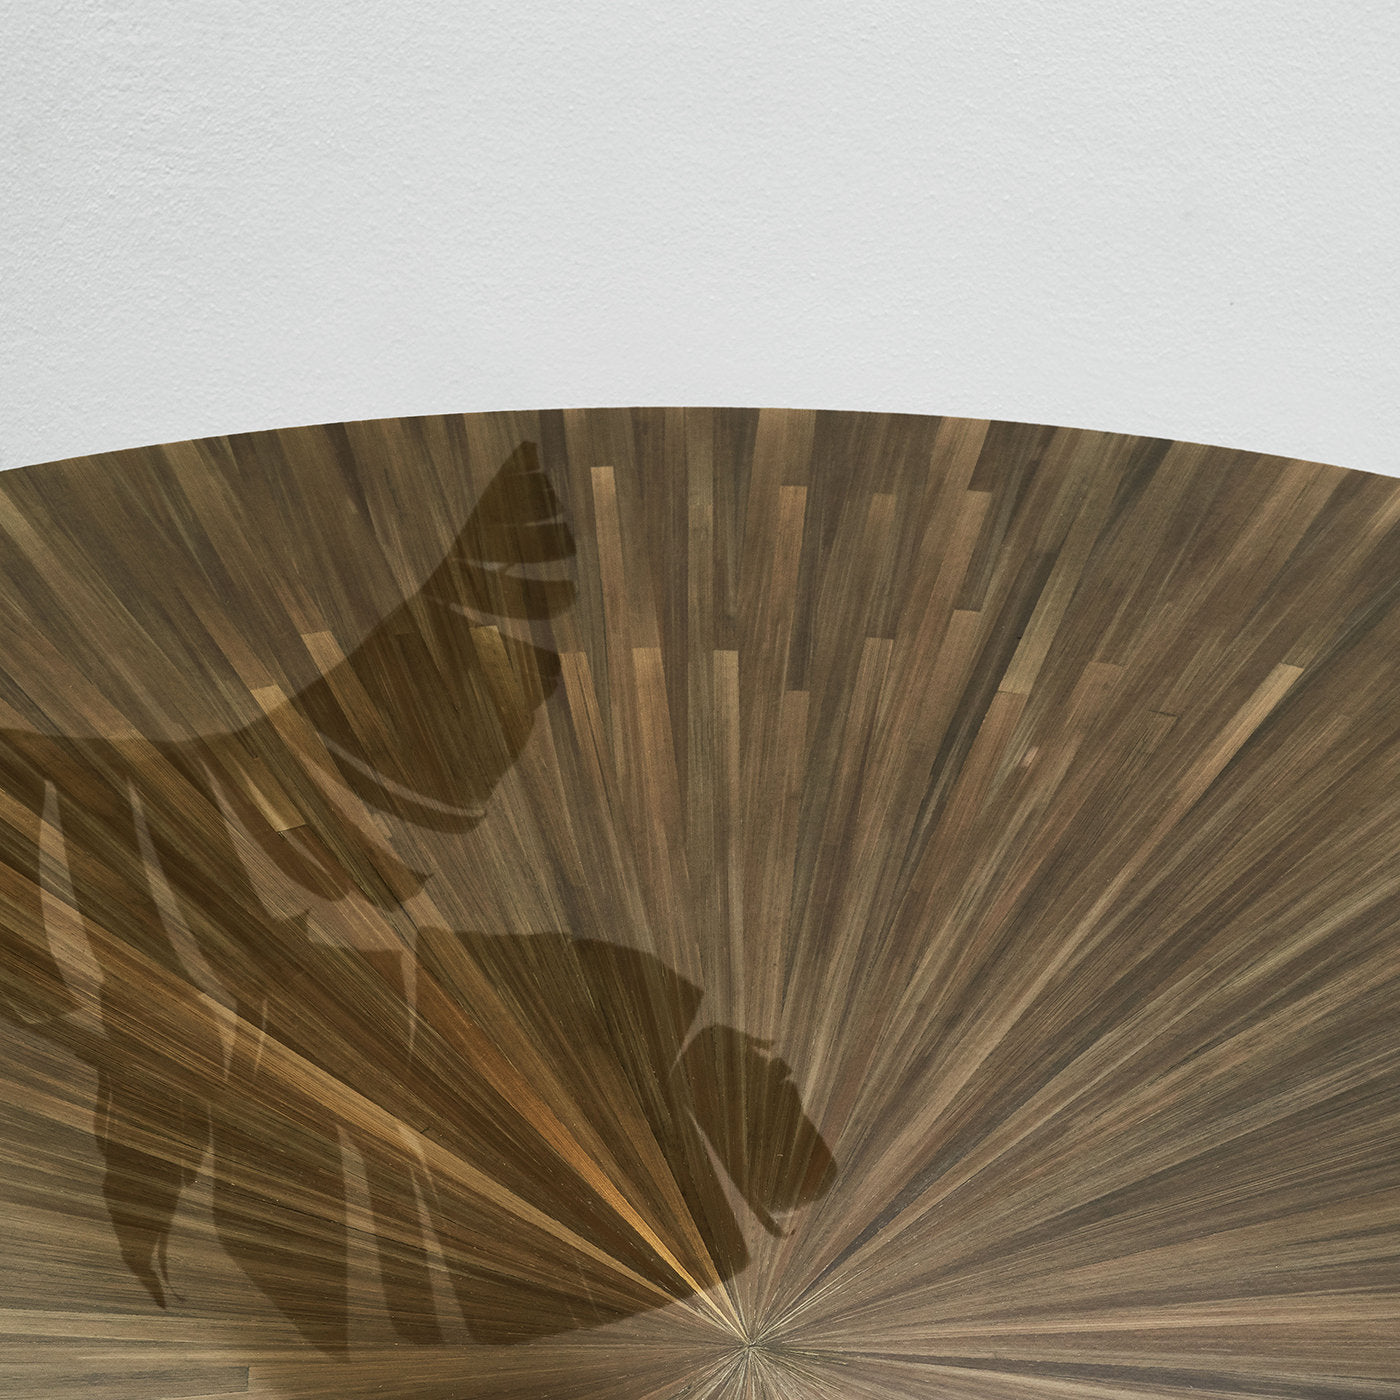 Radius Table by Antonio De Marco and Marco Sorrentino - Alternative view 2